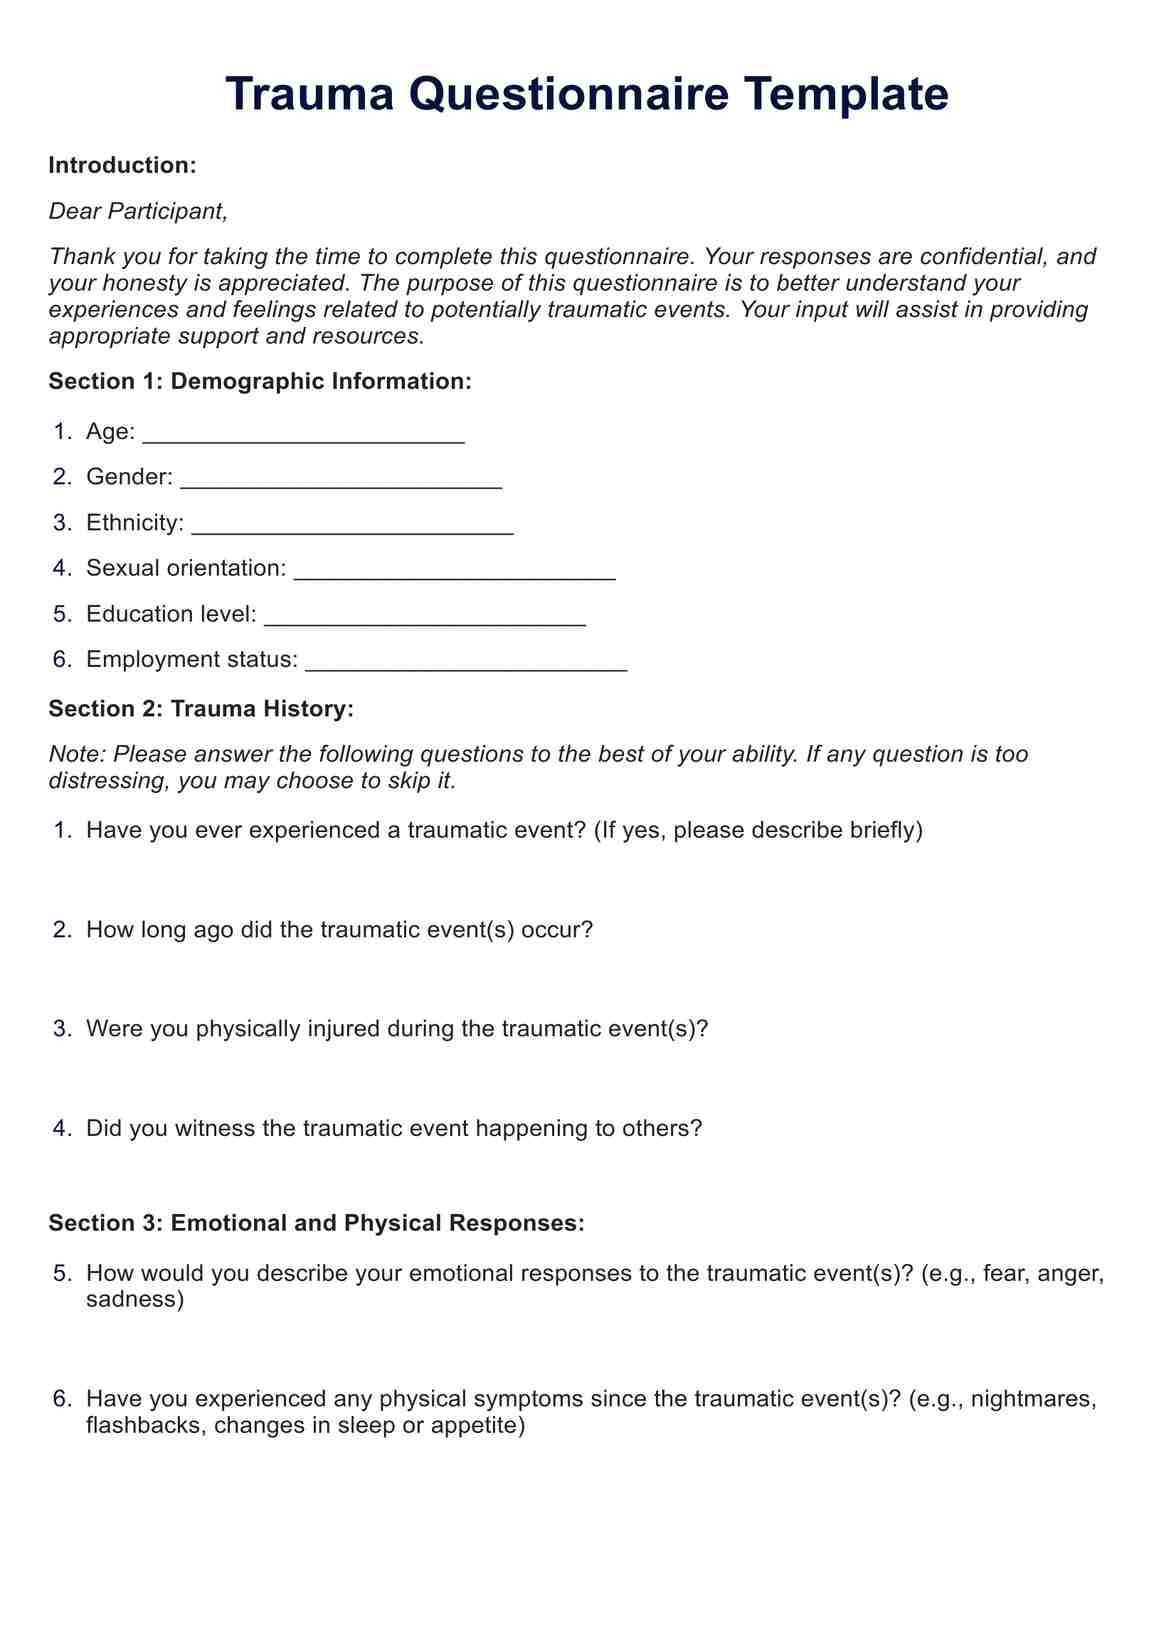 Trauma questionnaire PDF Example